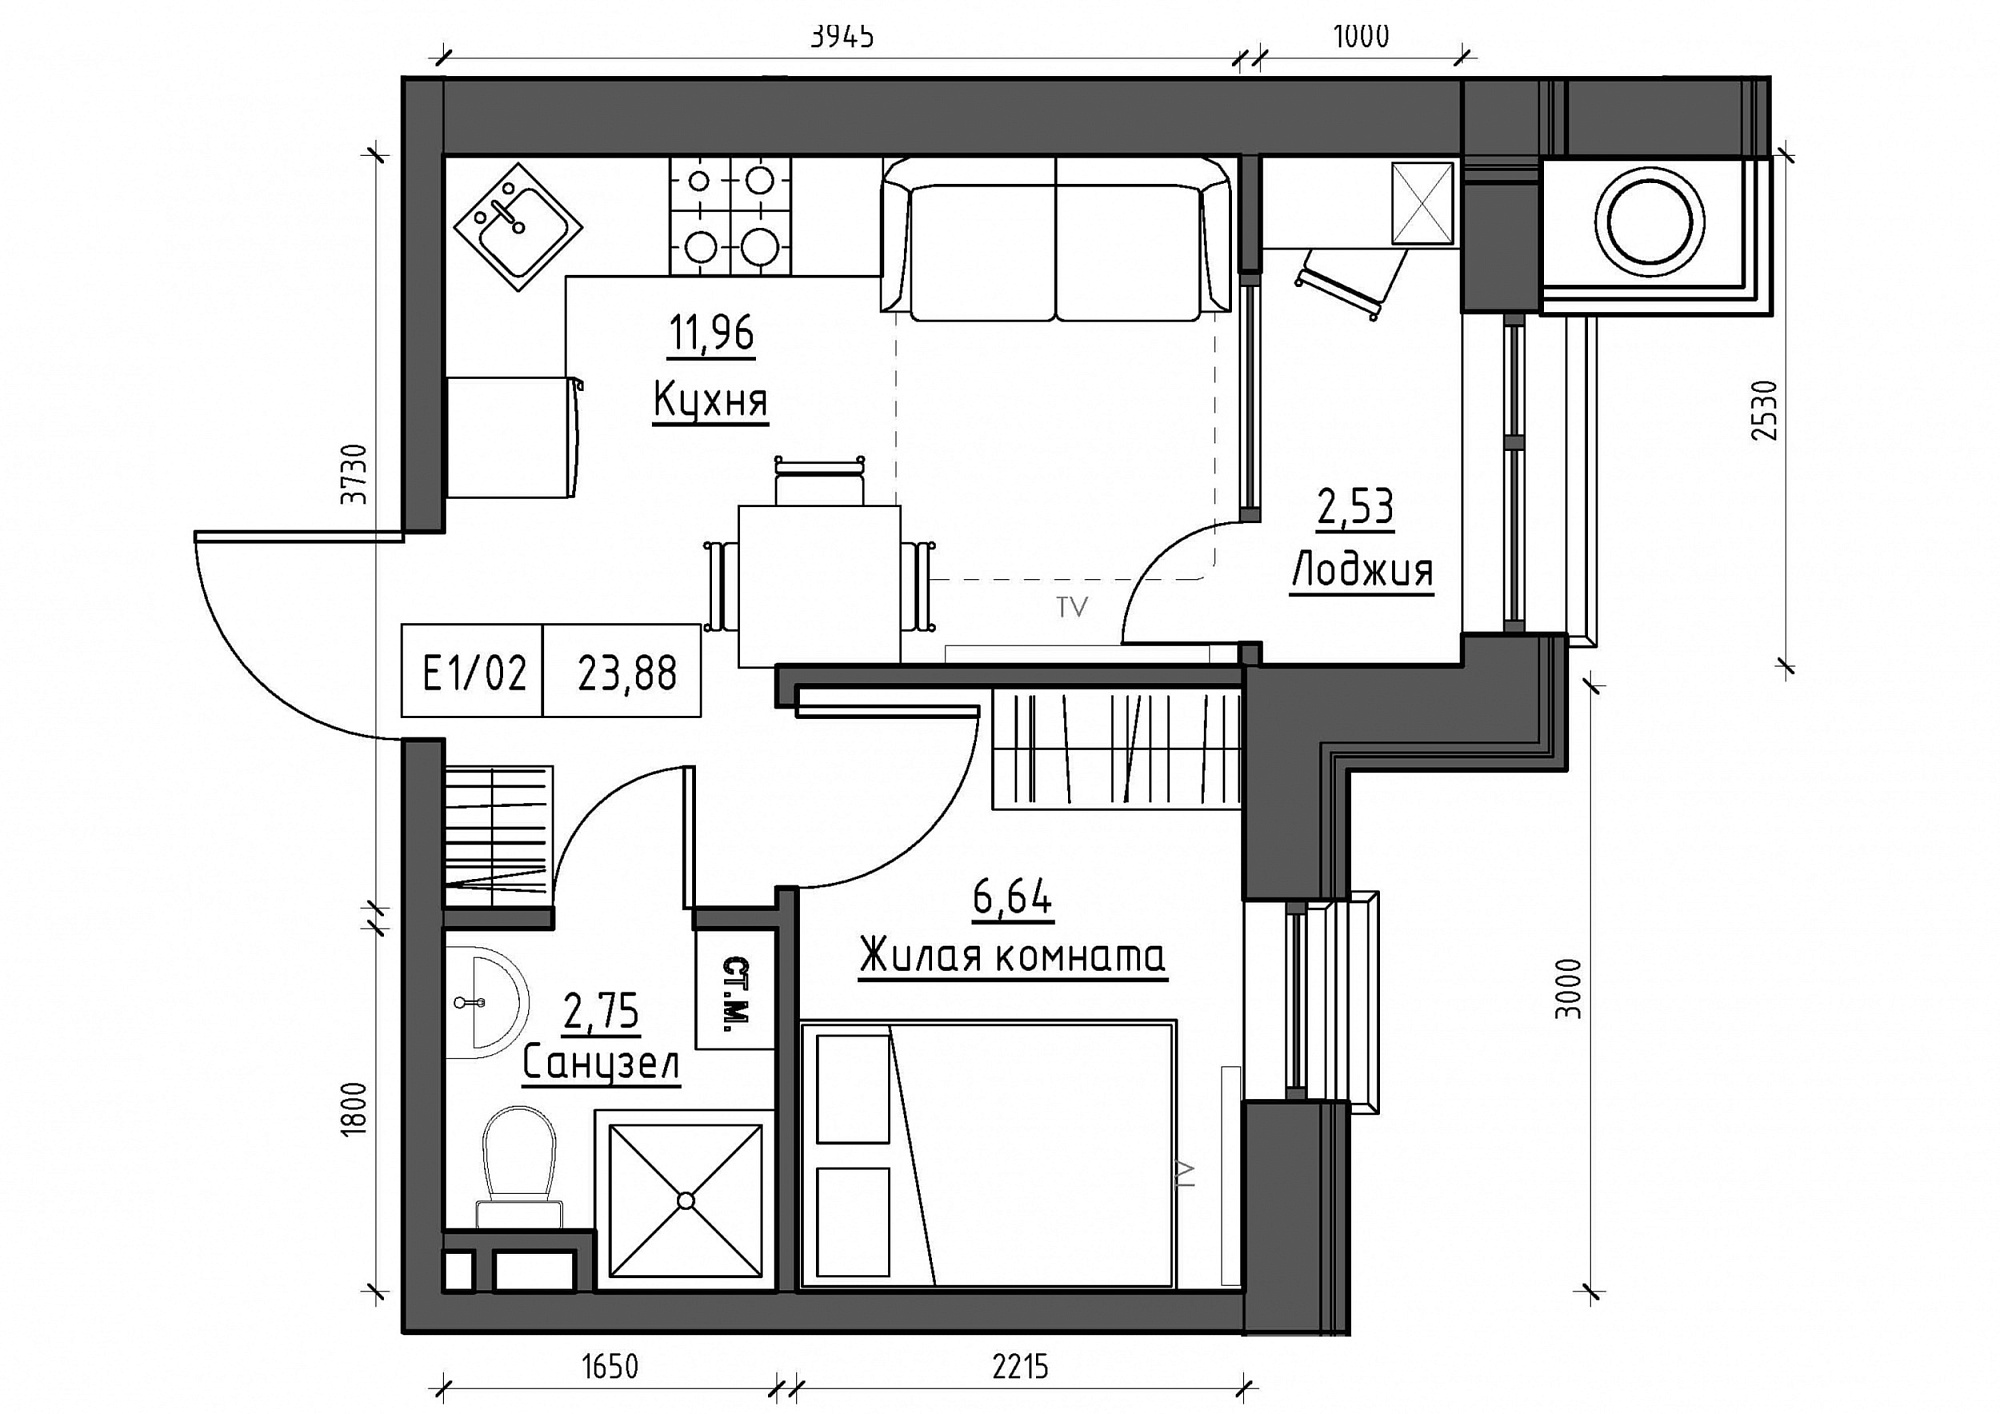 Planning 1-rm flats area 23.88m2, KS-012-04/0015.